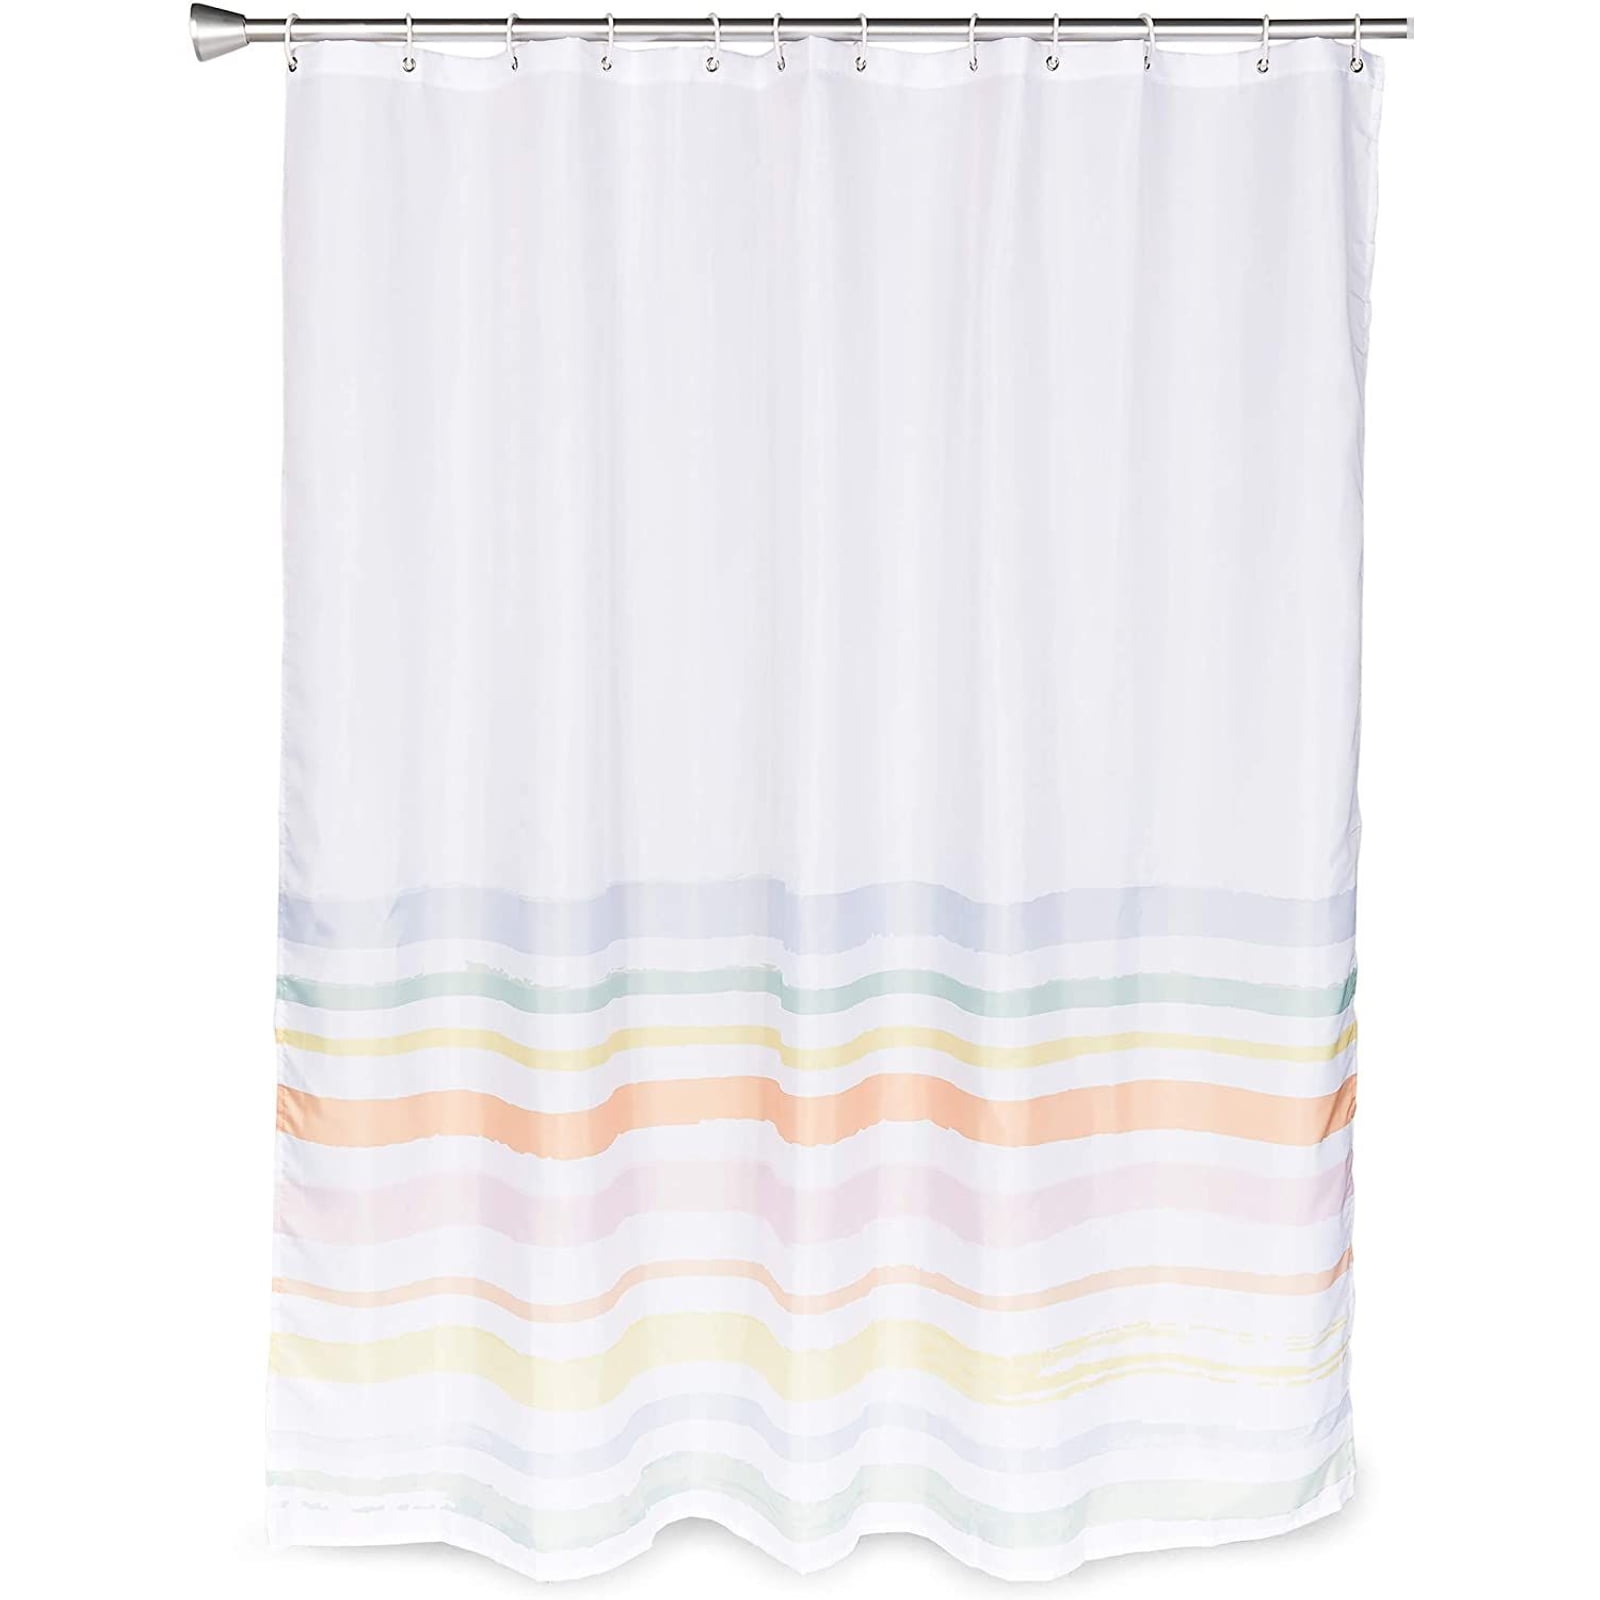 Racing car Shower Curtain Bedroom Decor Waterproof Fabric & 12hooks 71*71inch 